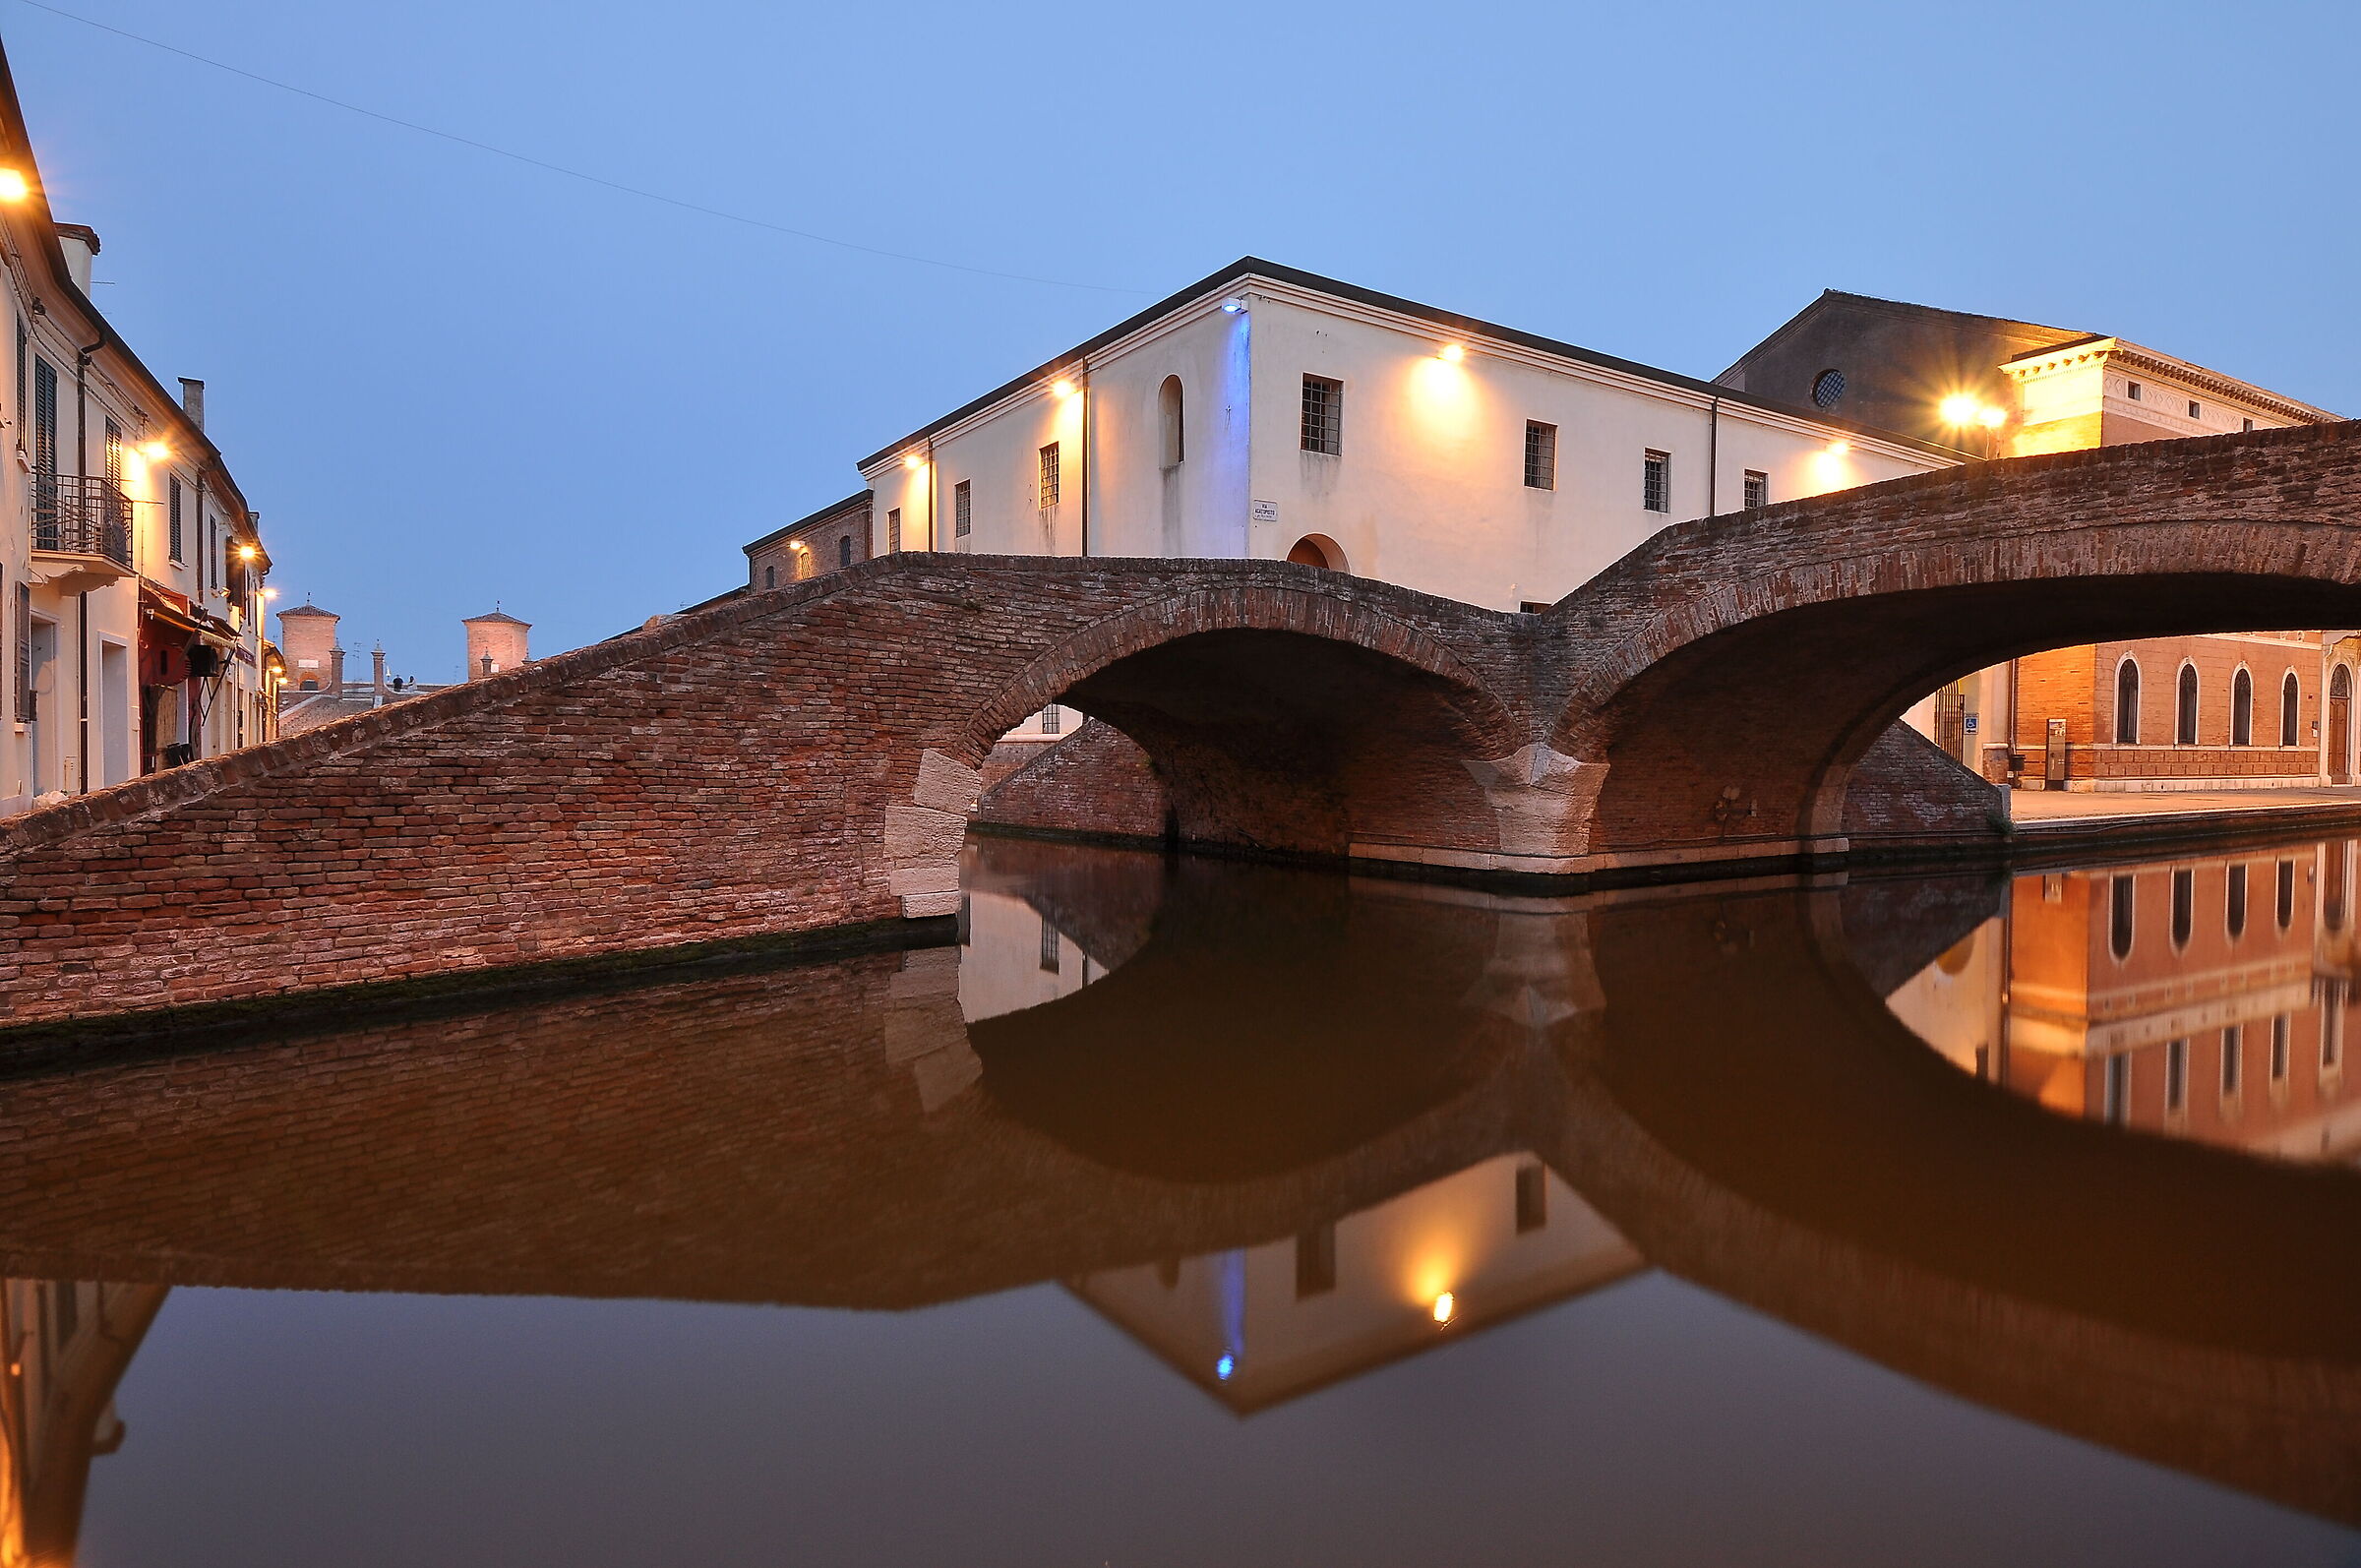 Reflections in Comacchio (2)...